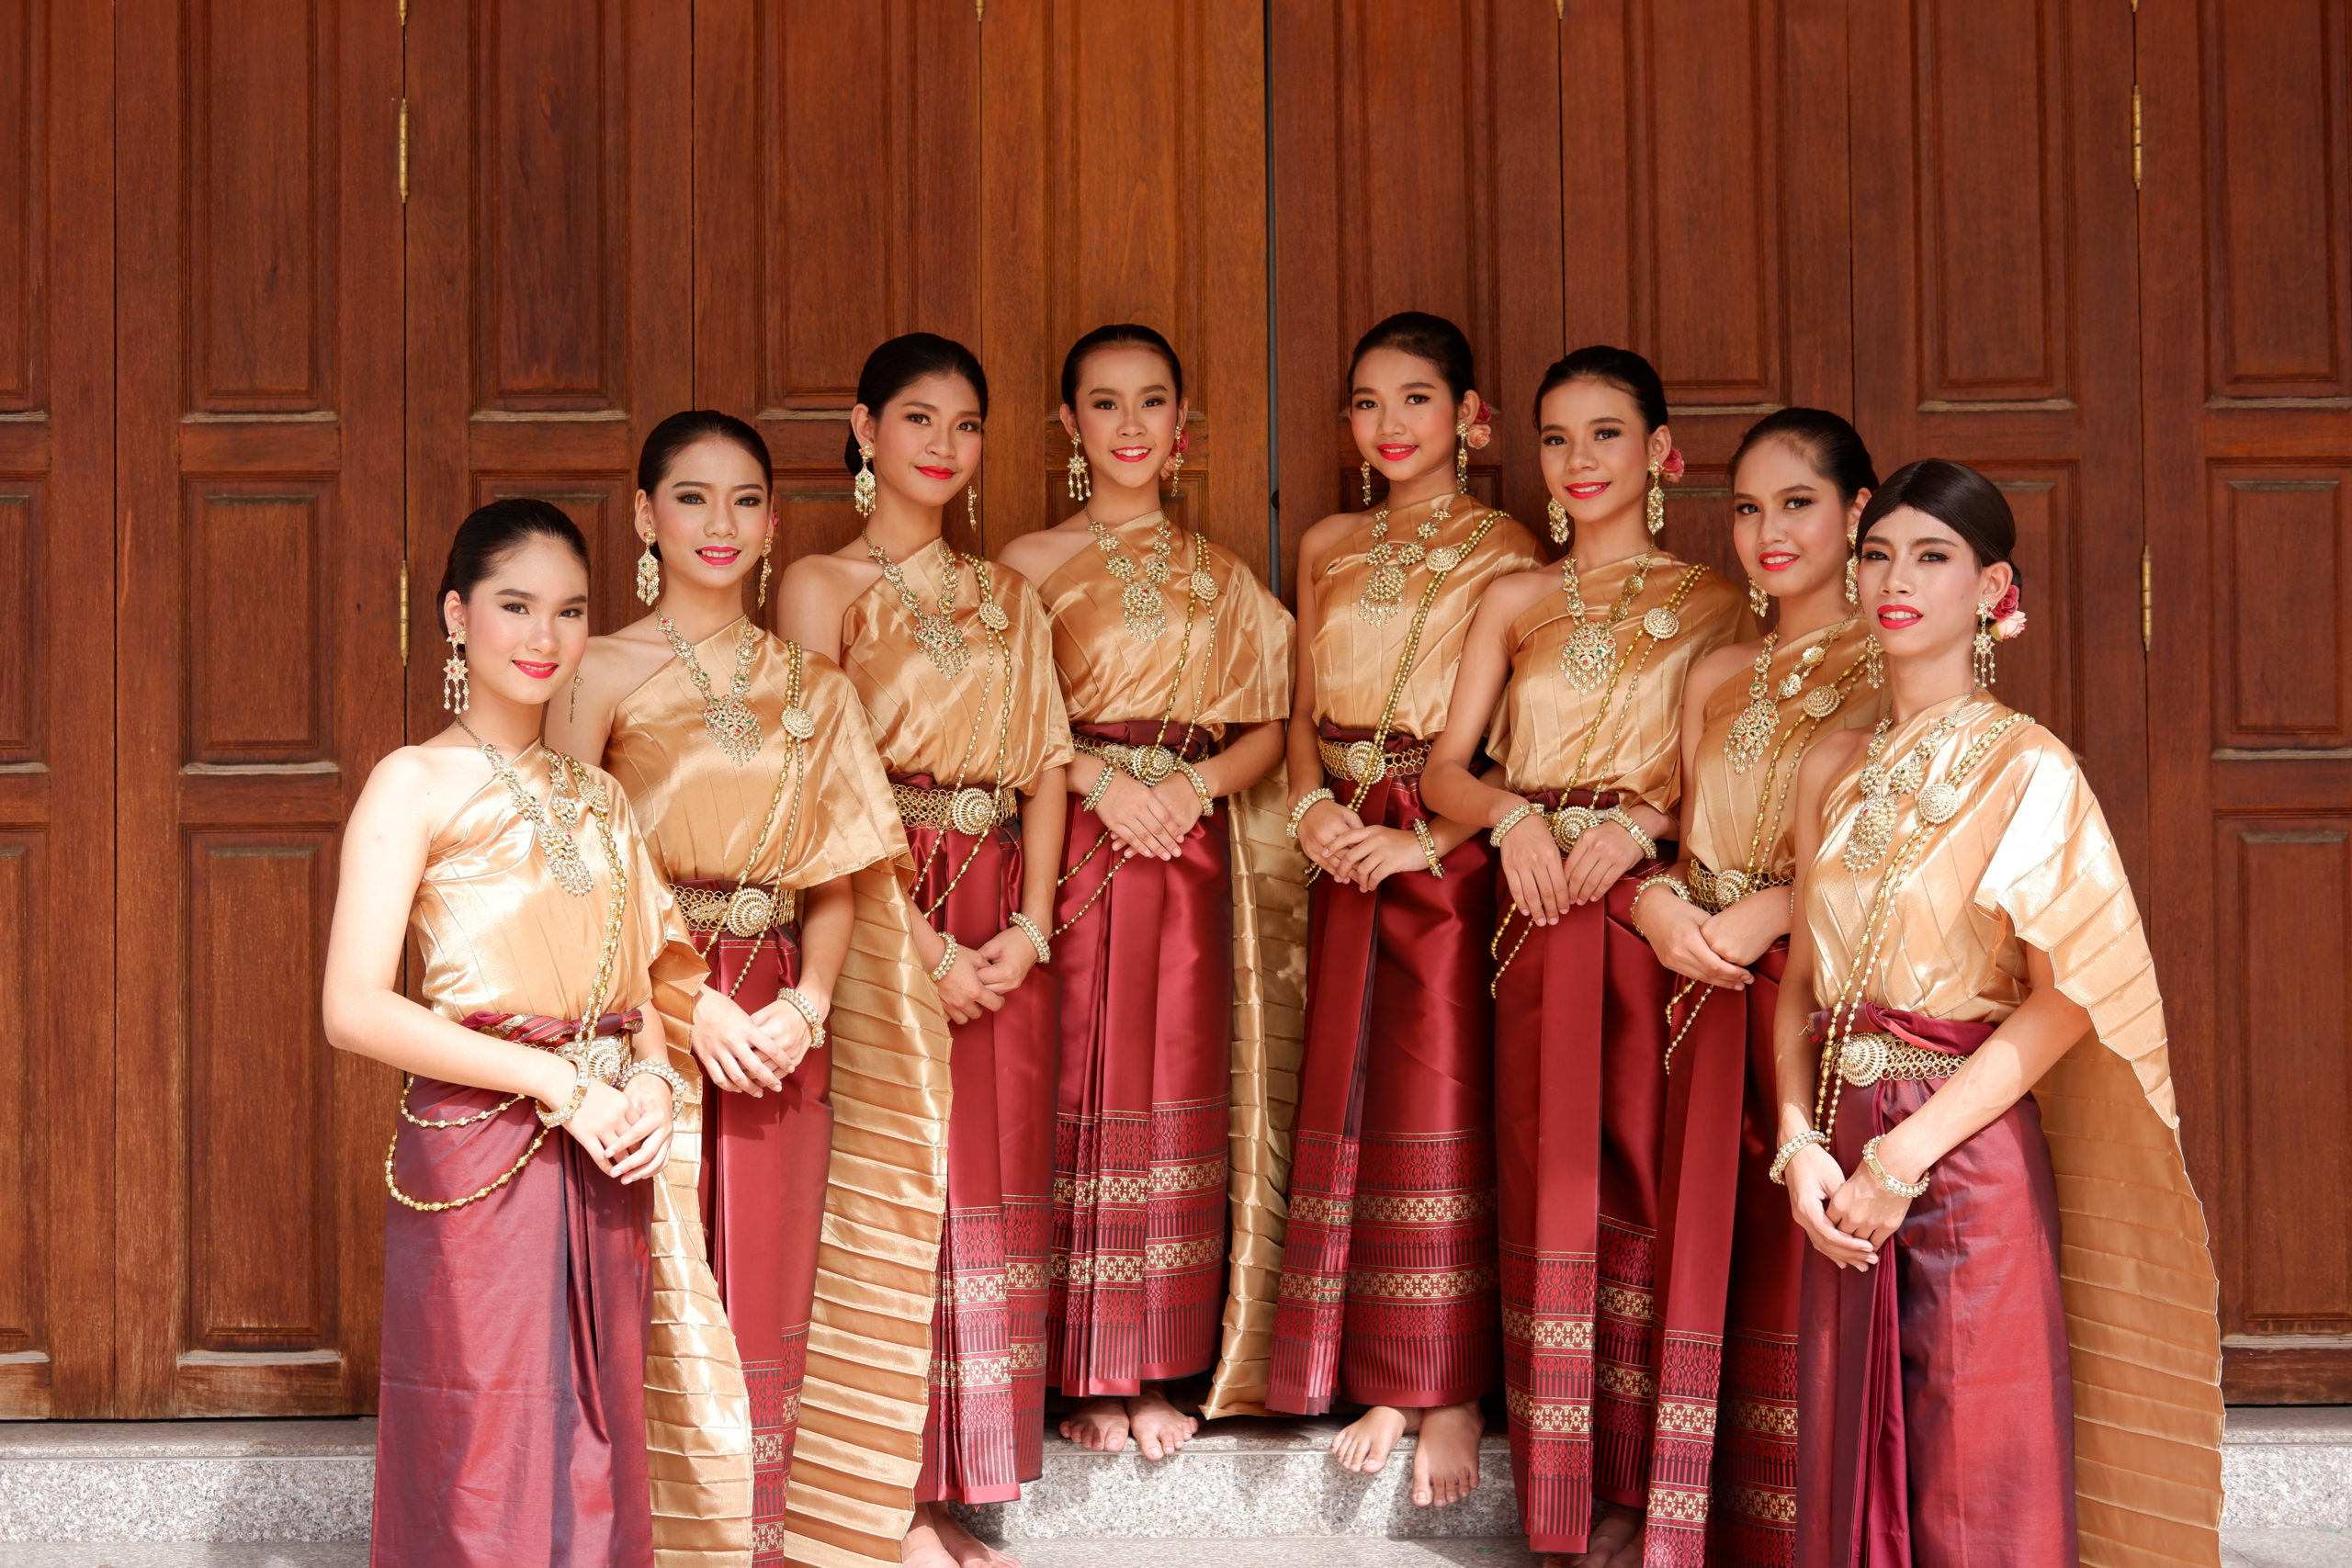 Traditional Dresses Around The World - Traveling Pari